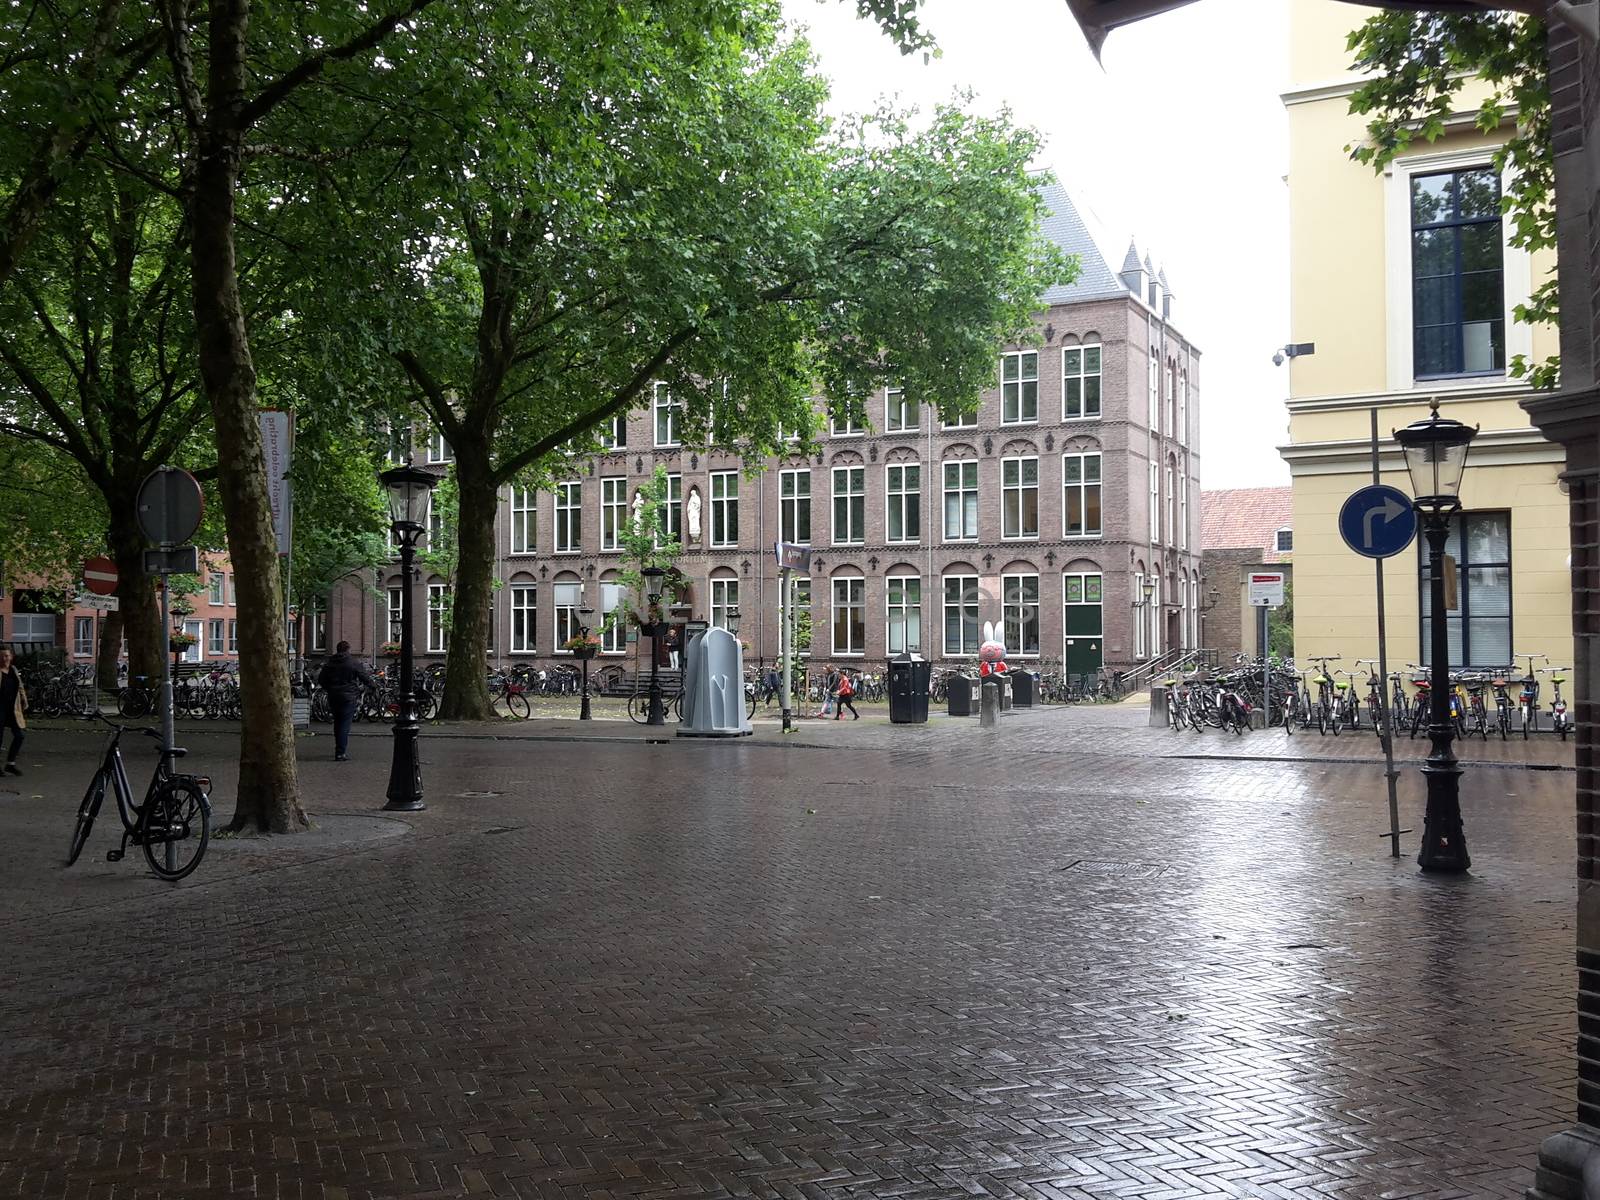 Utrecht, Netherlands - June 7, 2017: Traditional old street and buildings in Utrecht, Netherlands.